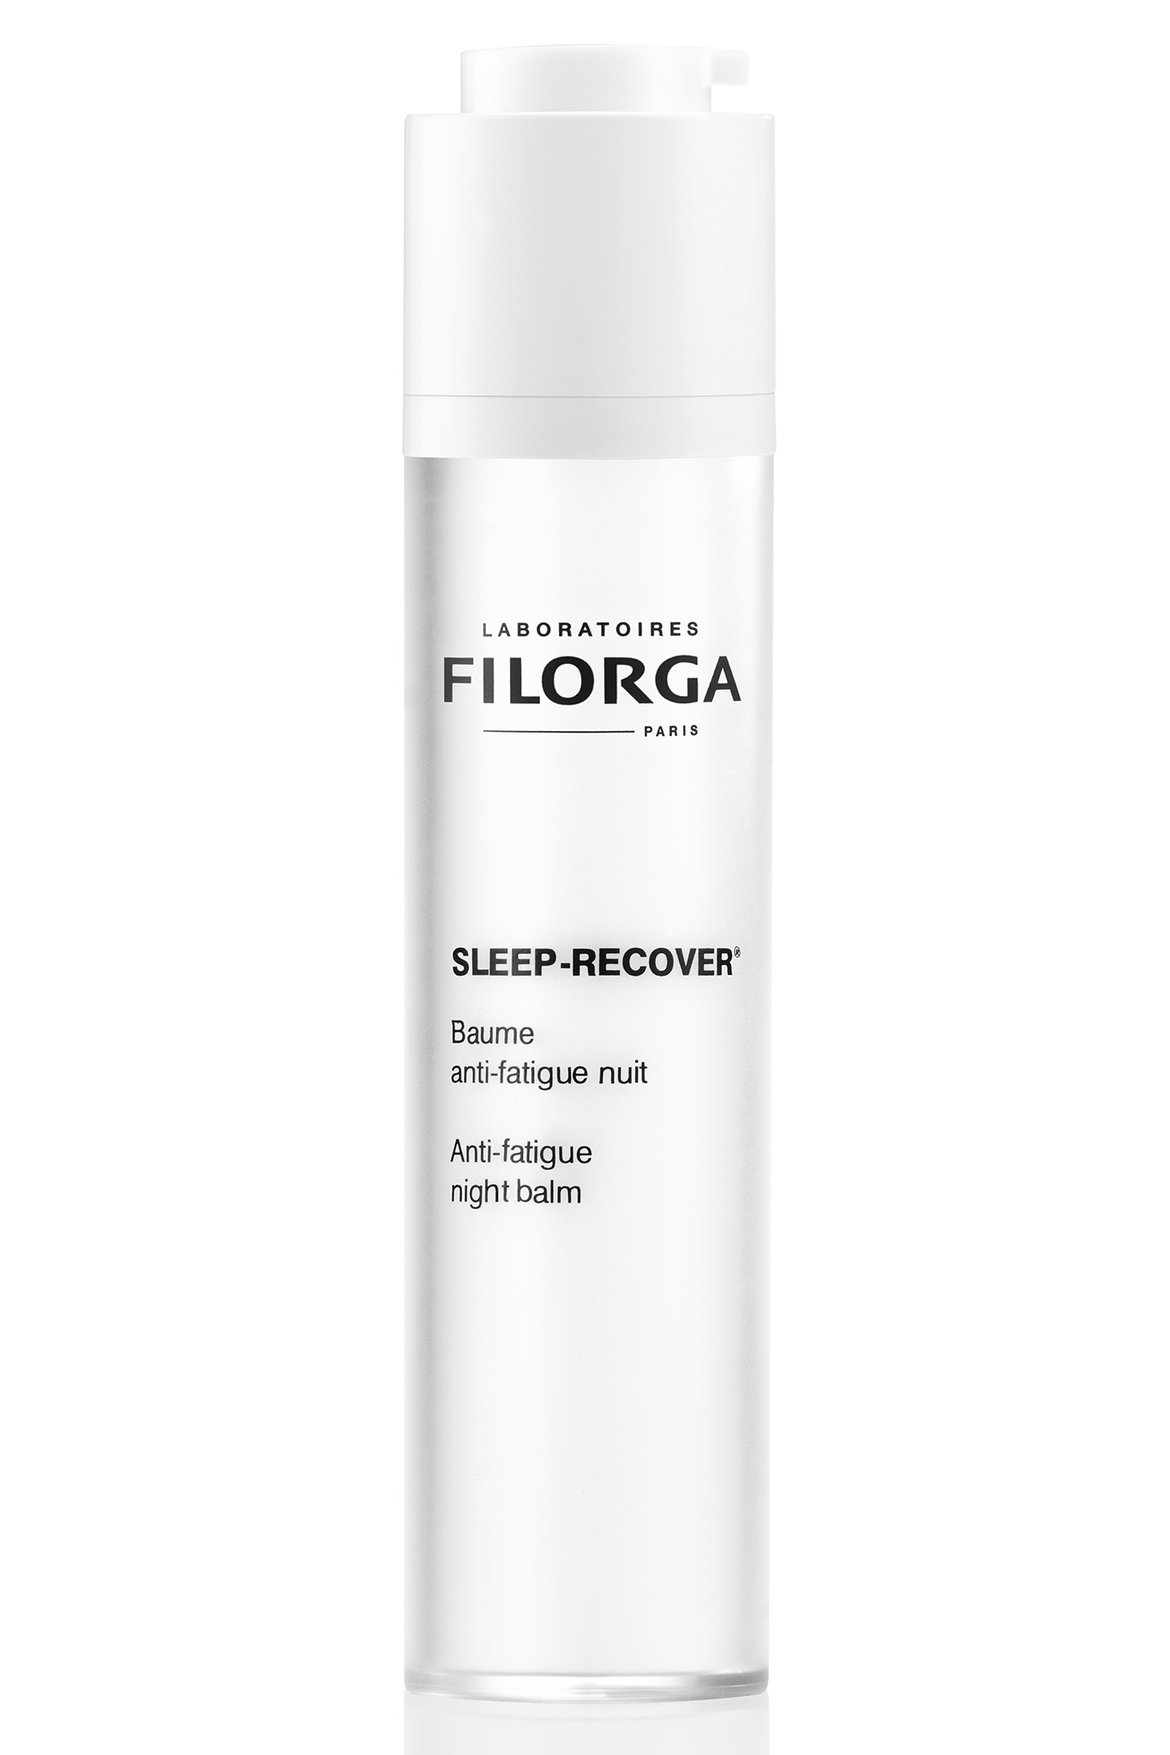 filorga sleep recover